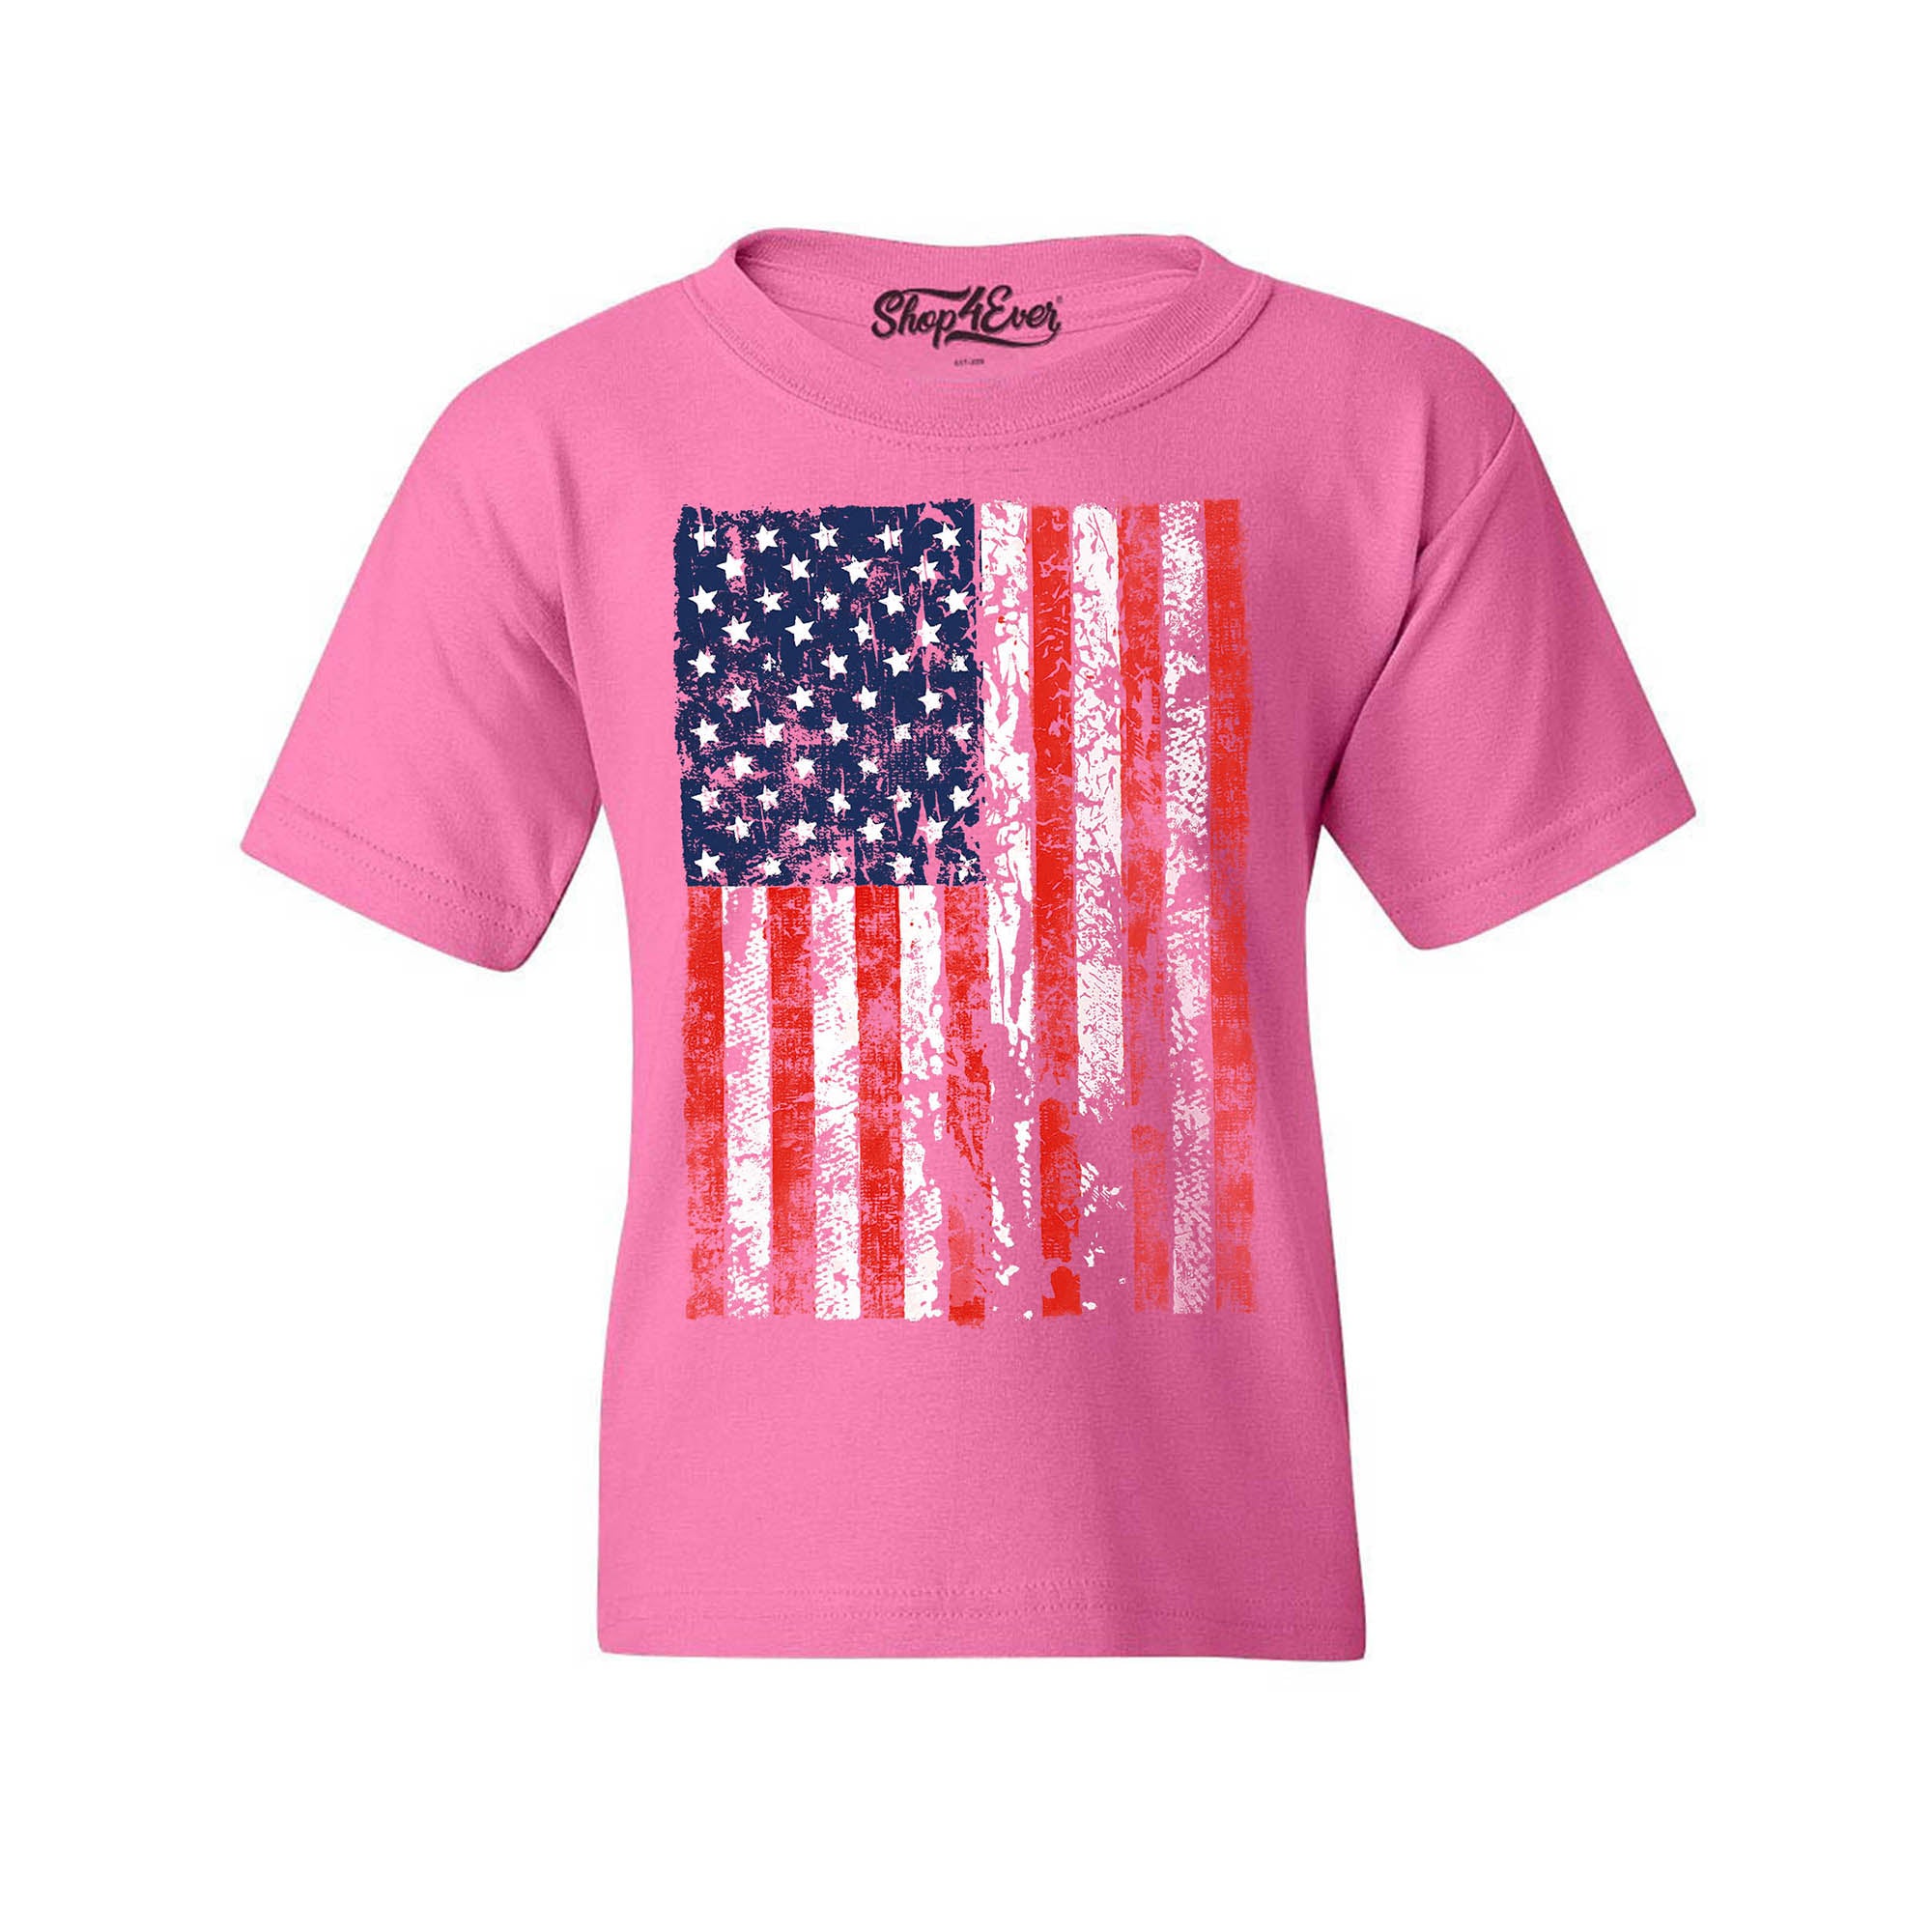 United States of America Flag Vintage Youth's T-Shirt USA Flag Shirts